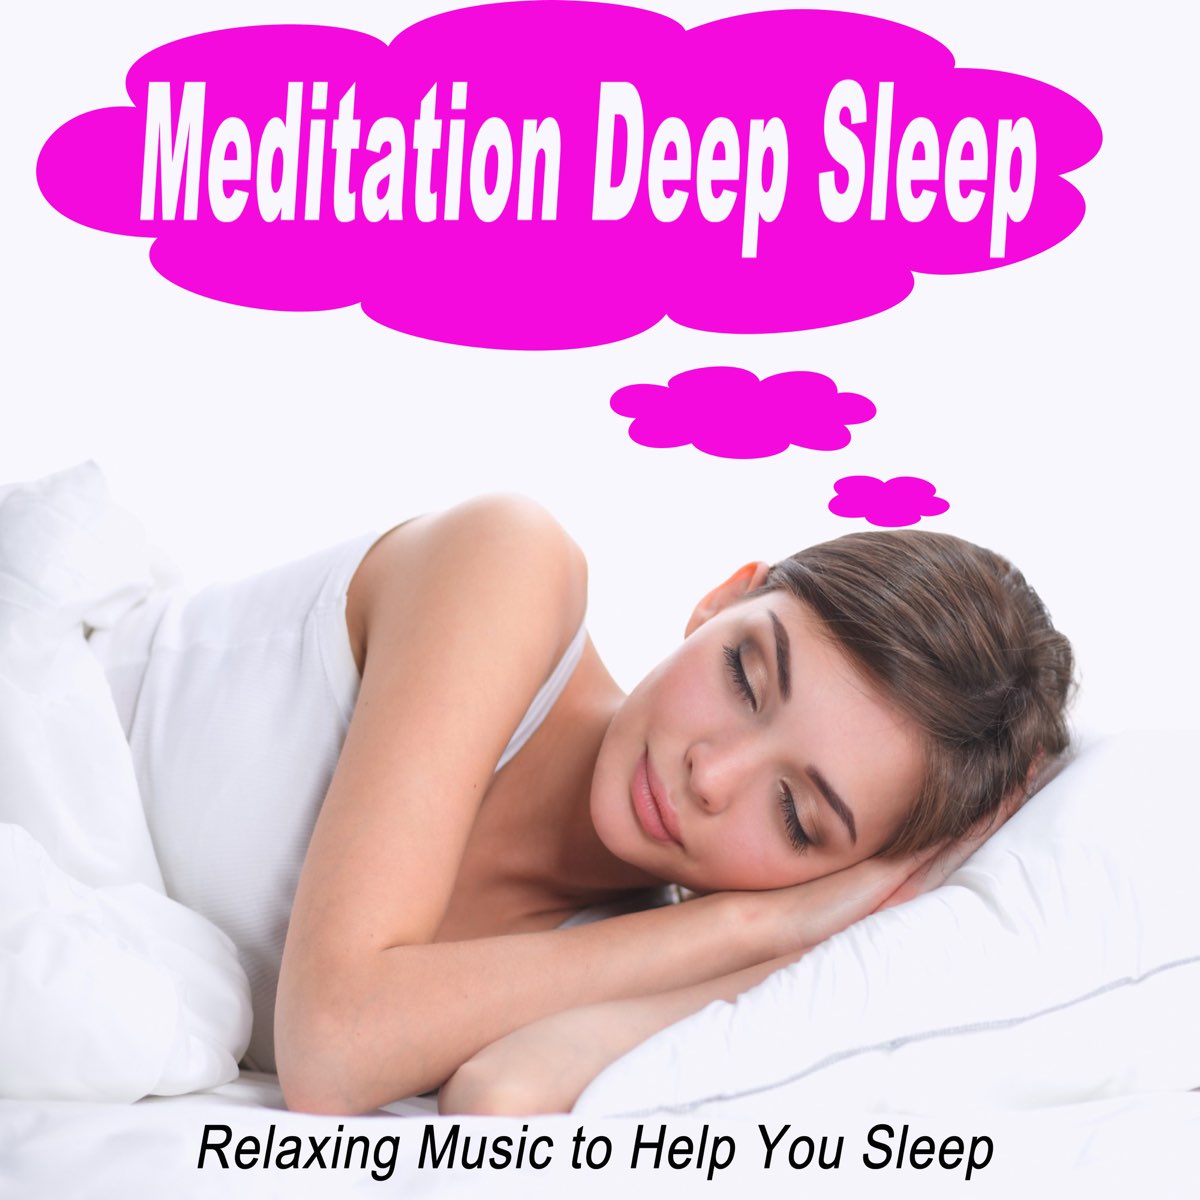 Deep Sleep. Meditation Sleep Music. Deep Sleep Music альбом. Медитация для сна. Музыка для глубокой медитации